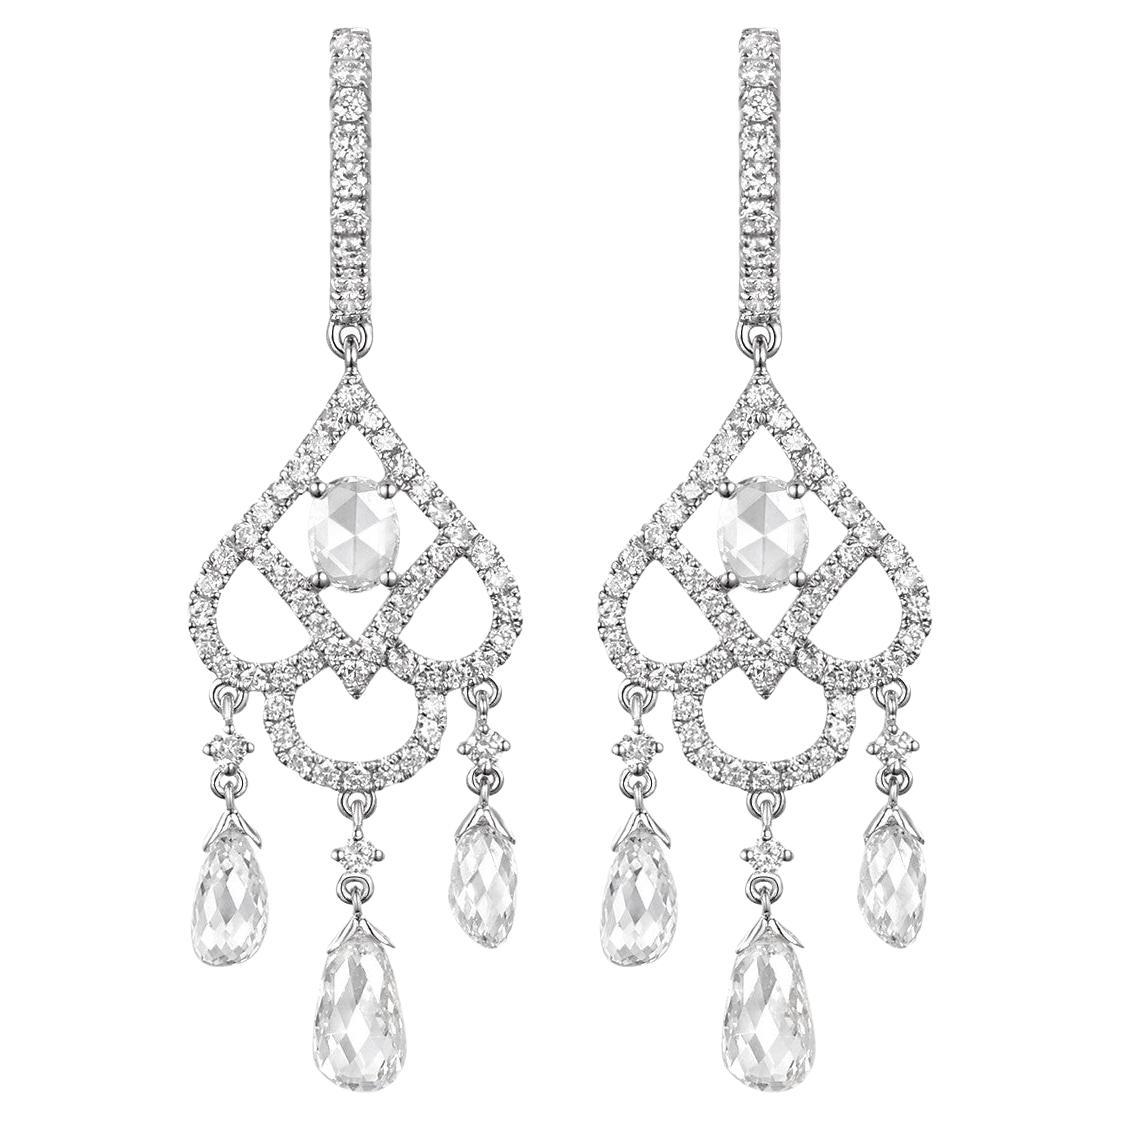 Vintage Rose Cut and Briolette Diamond Dangle Earrings in 18K White Gold